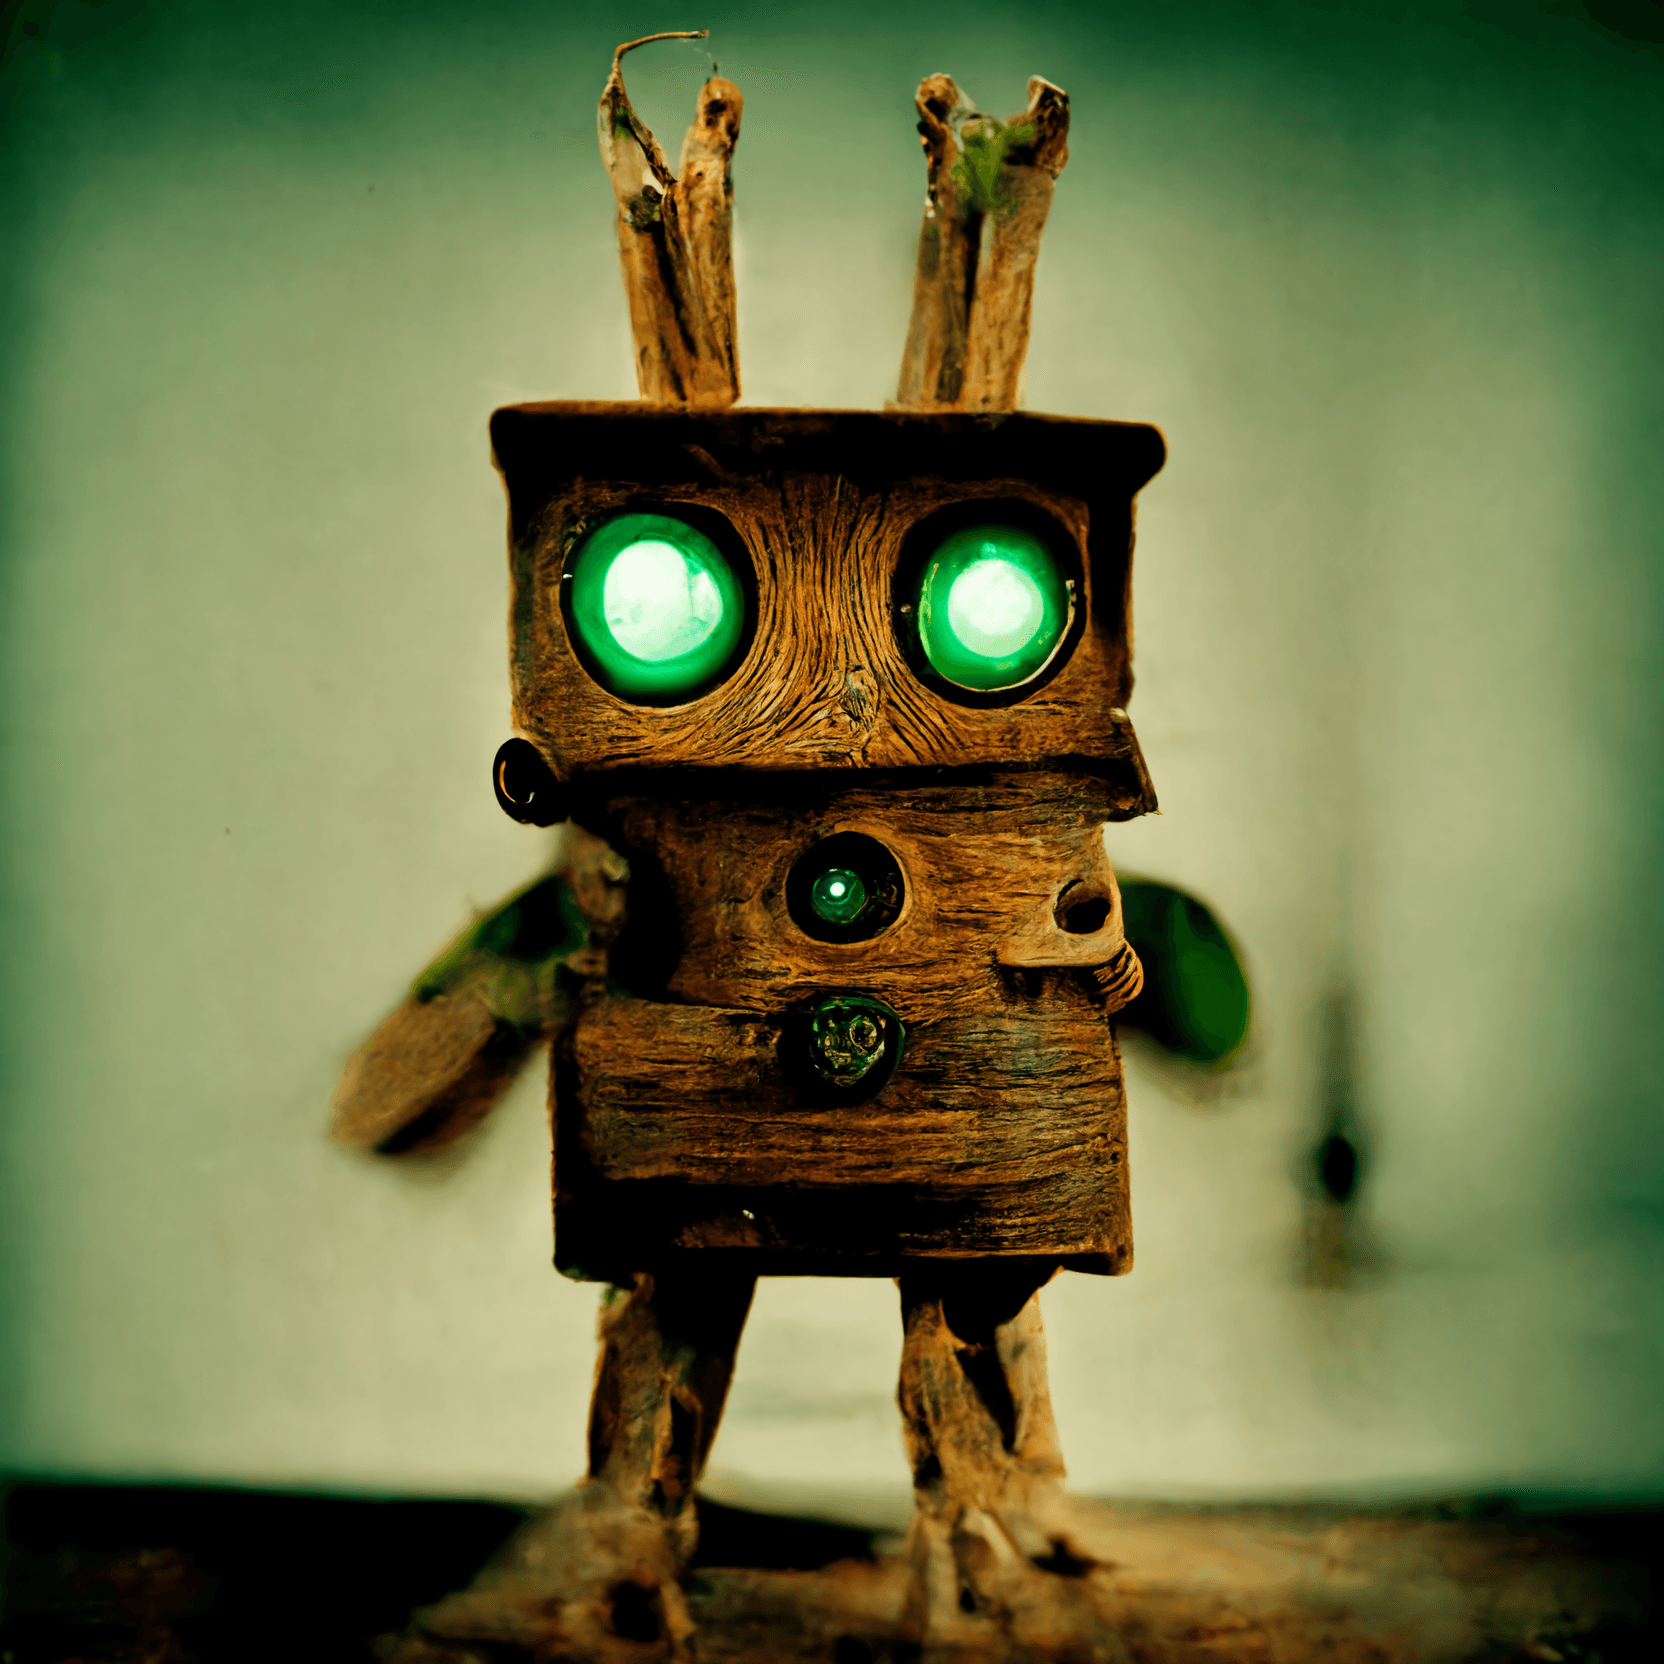 Wooden robot "Aja"